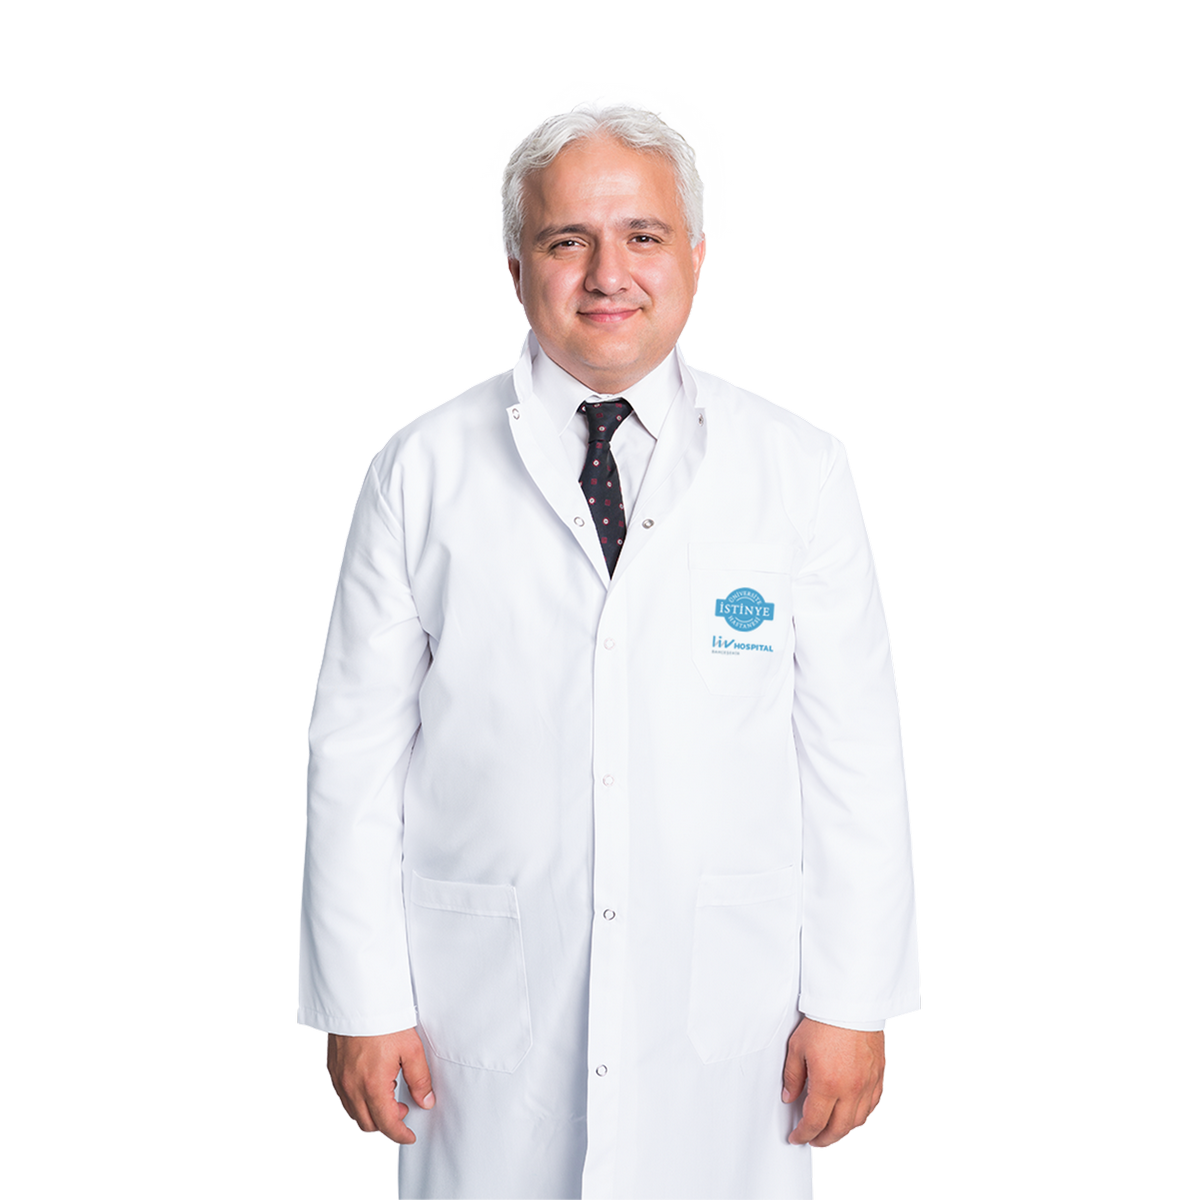 Assoc. Prof. MD. Akin Akakin